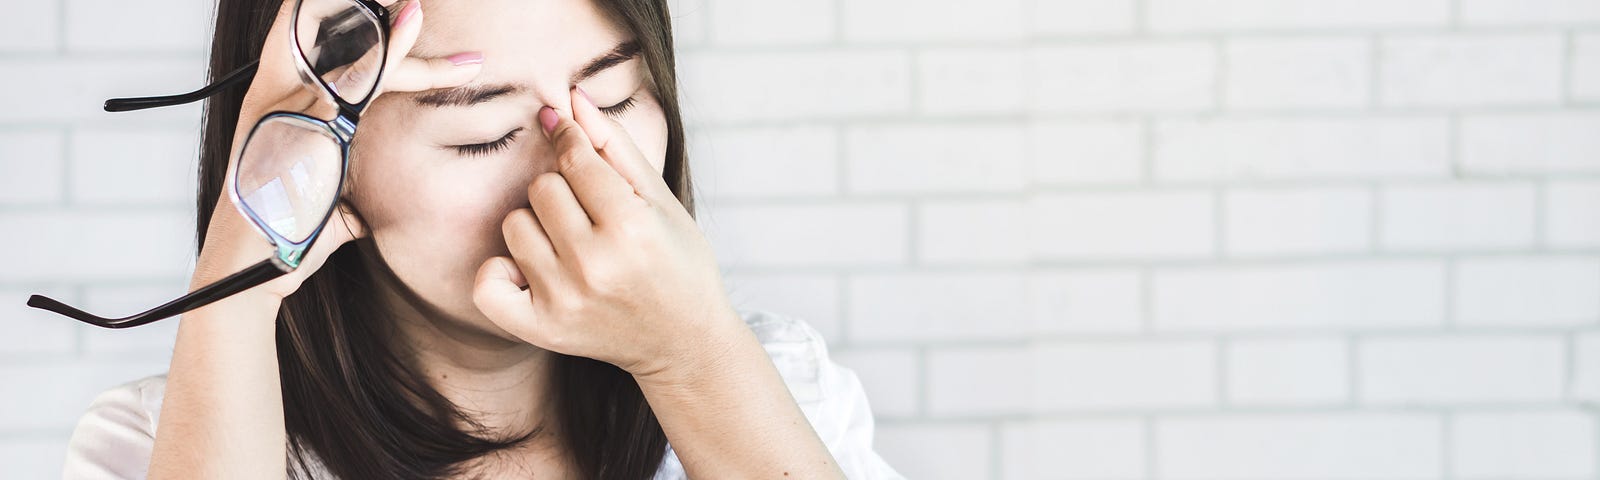 A woman showing discomfort from digital eye strain